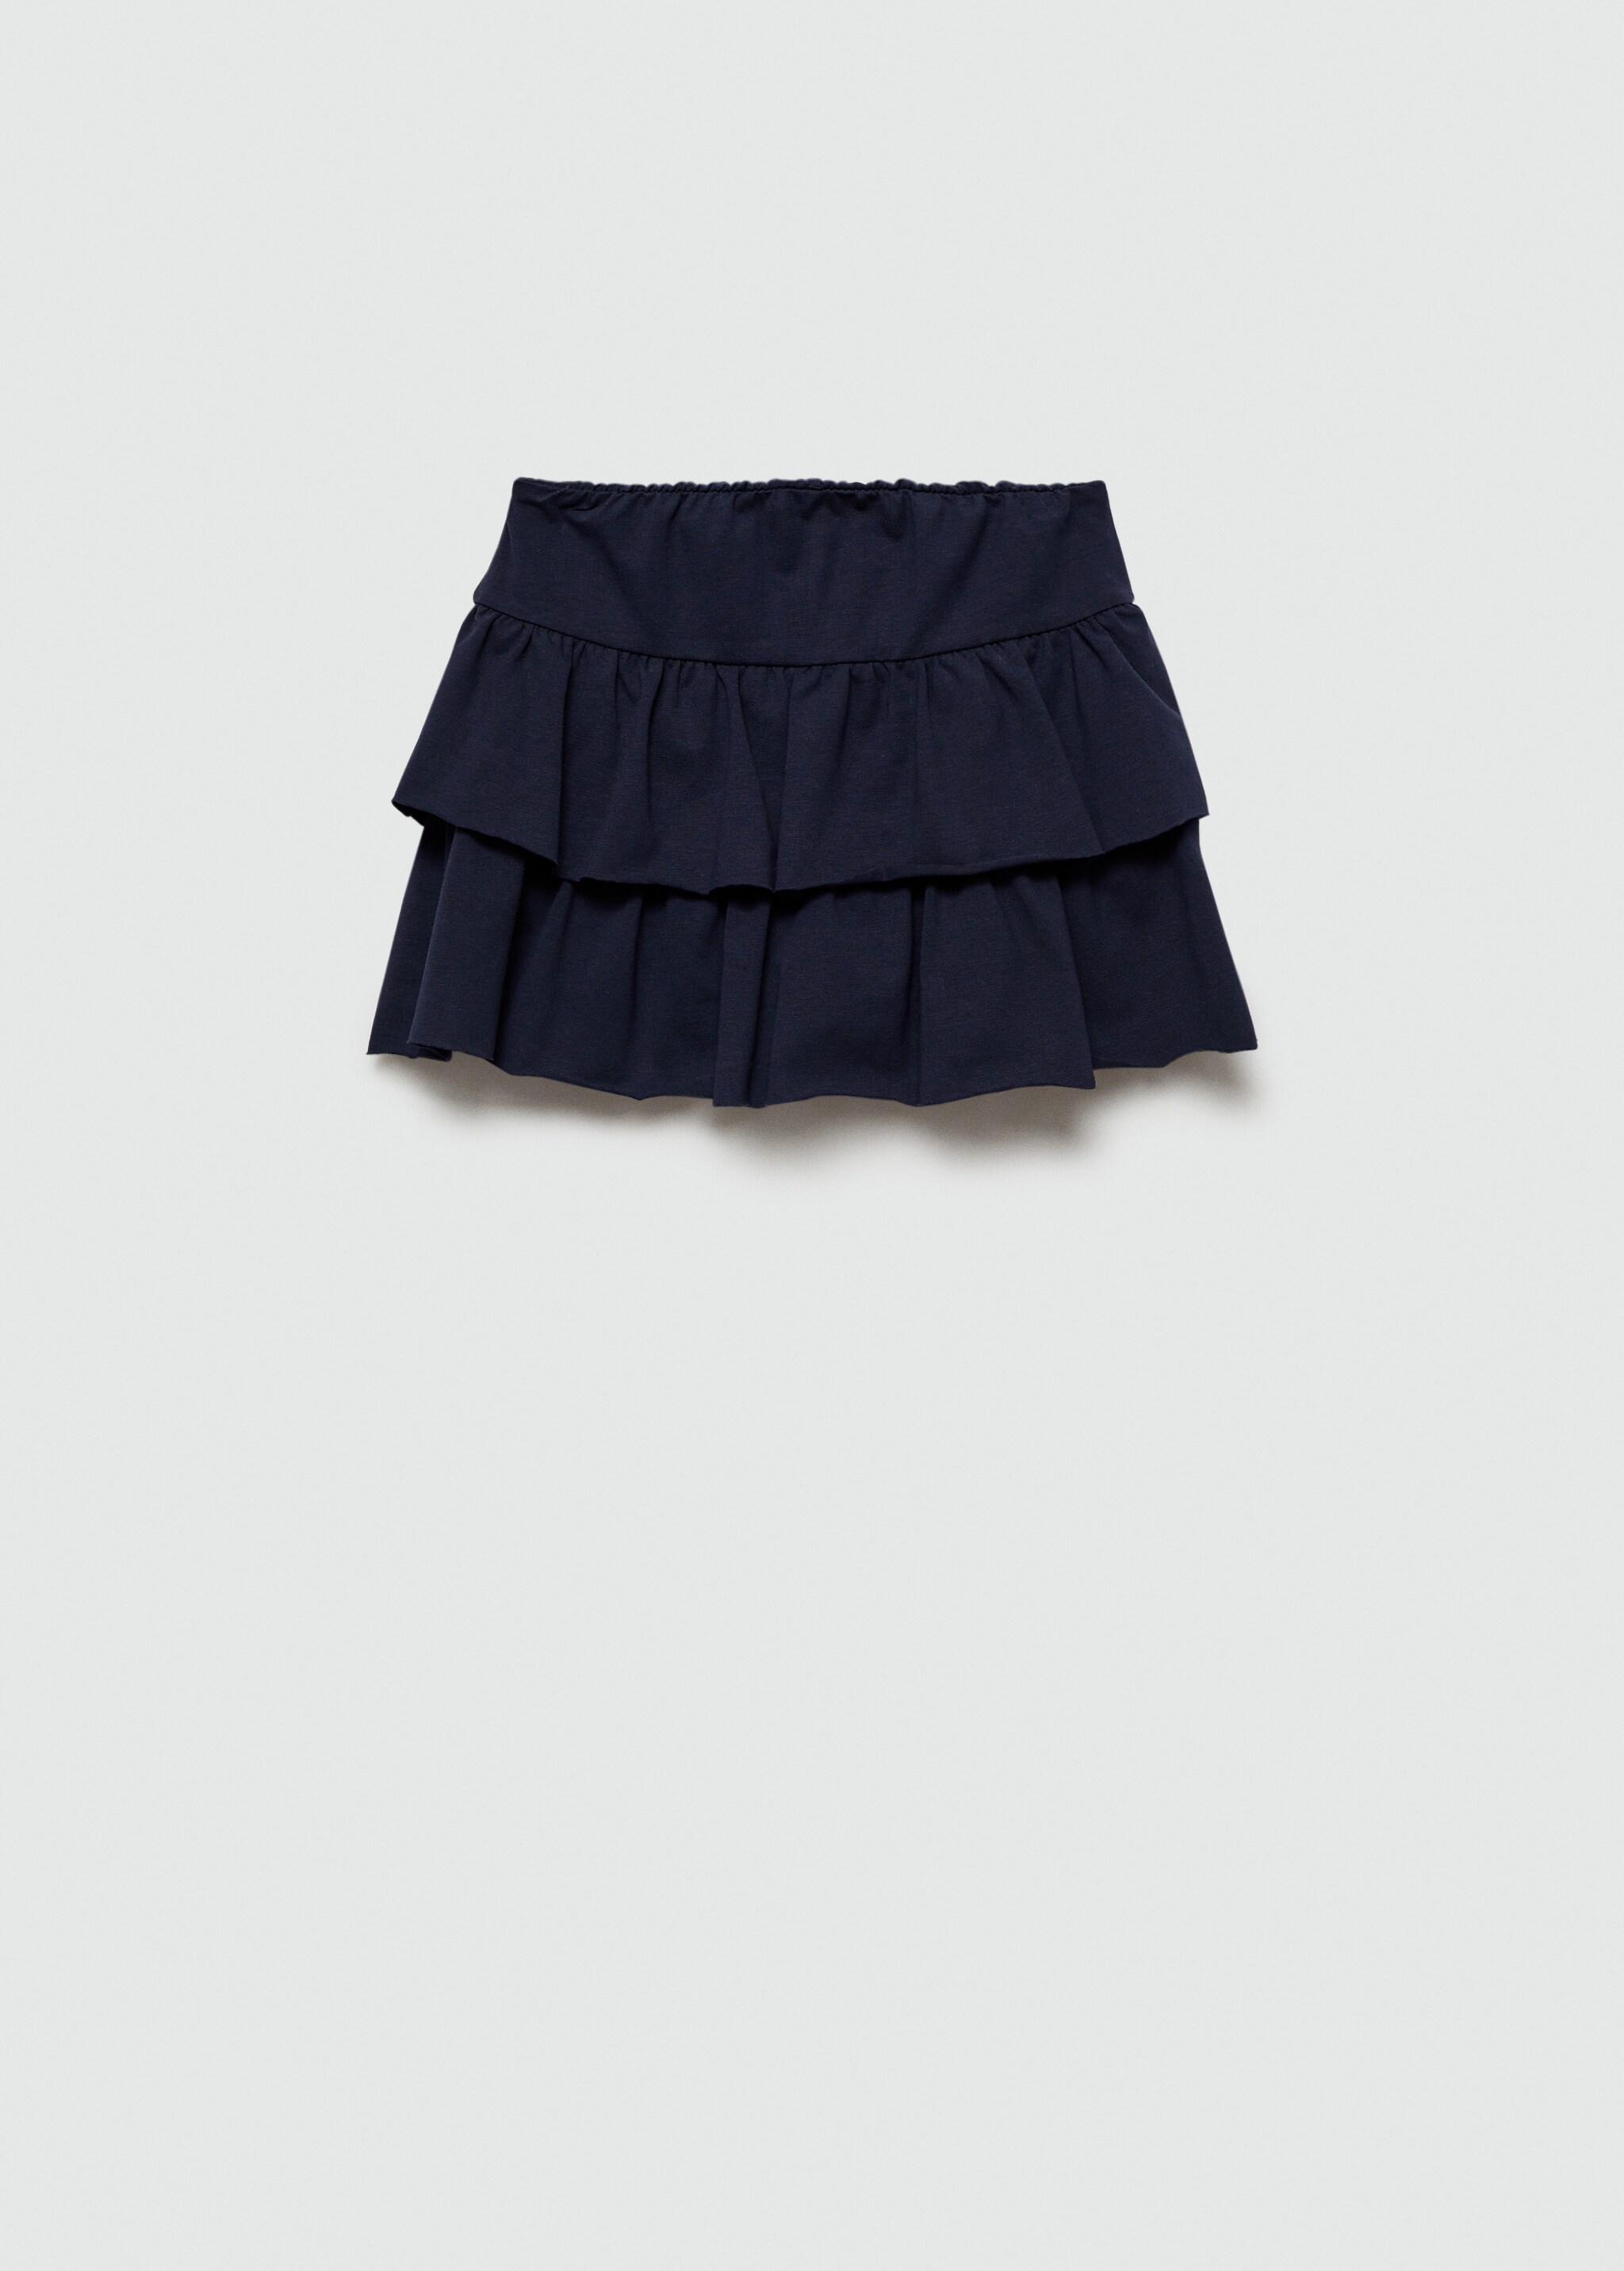 Ruffled trouser skirt - Изделие без модели